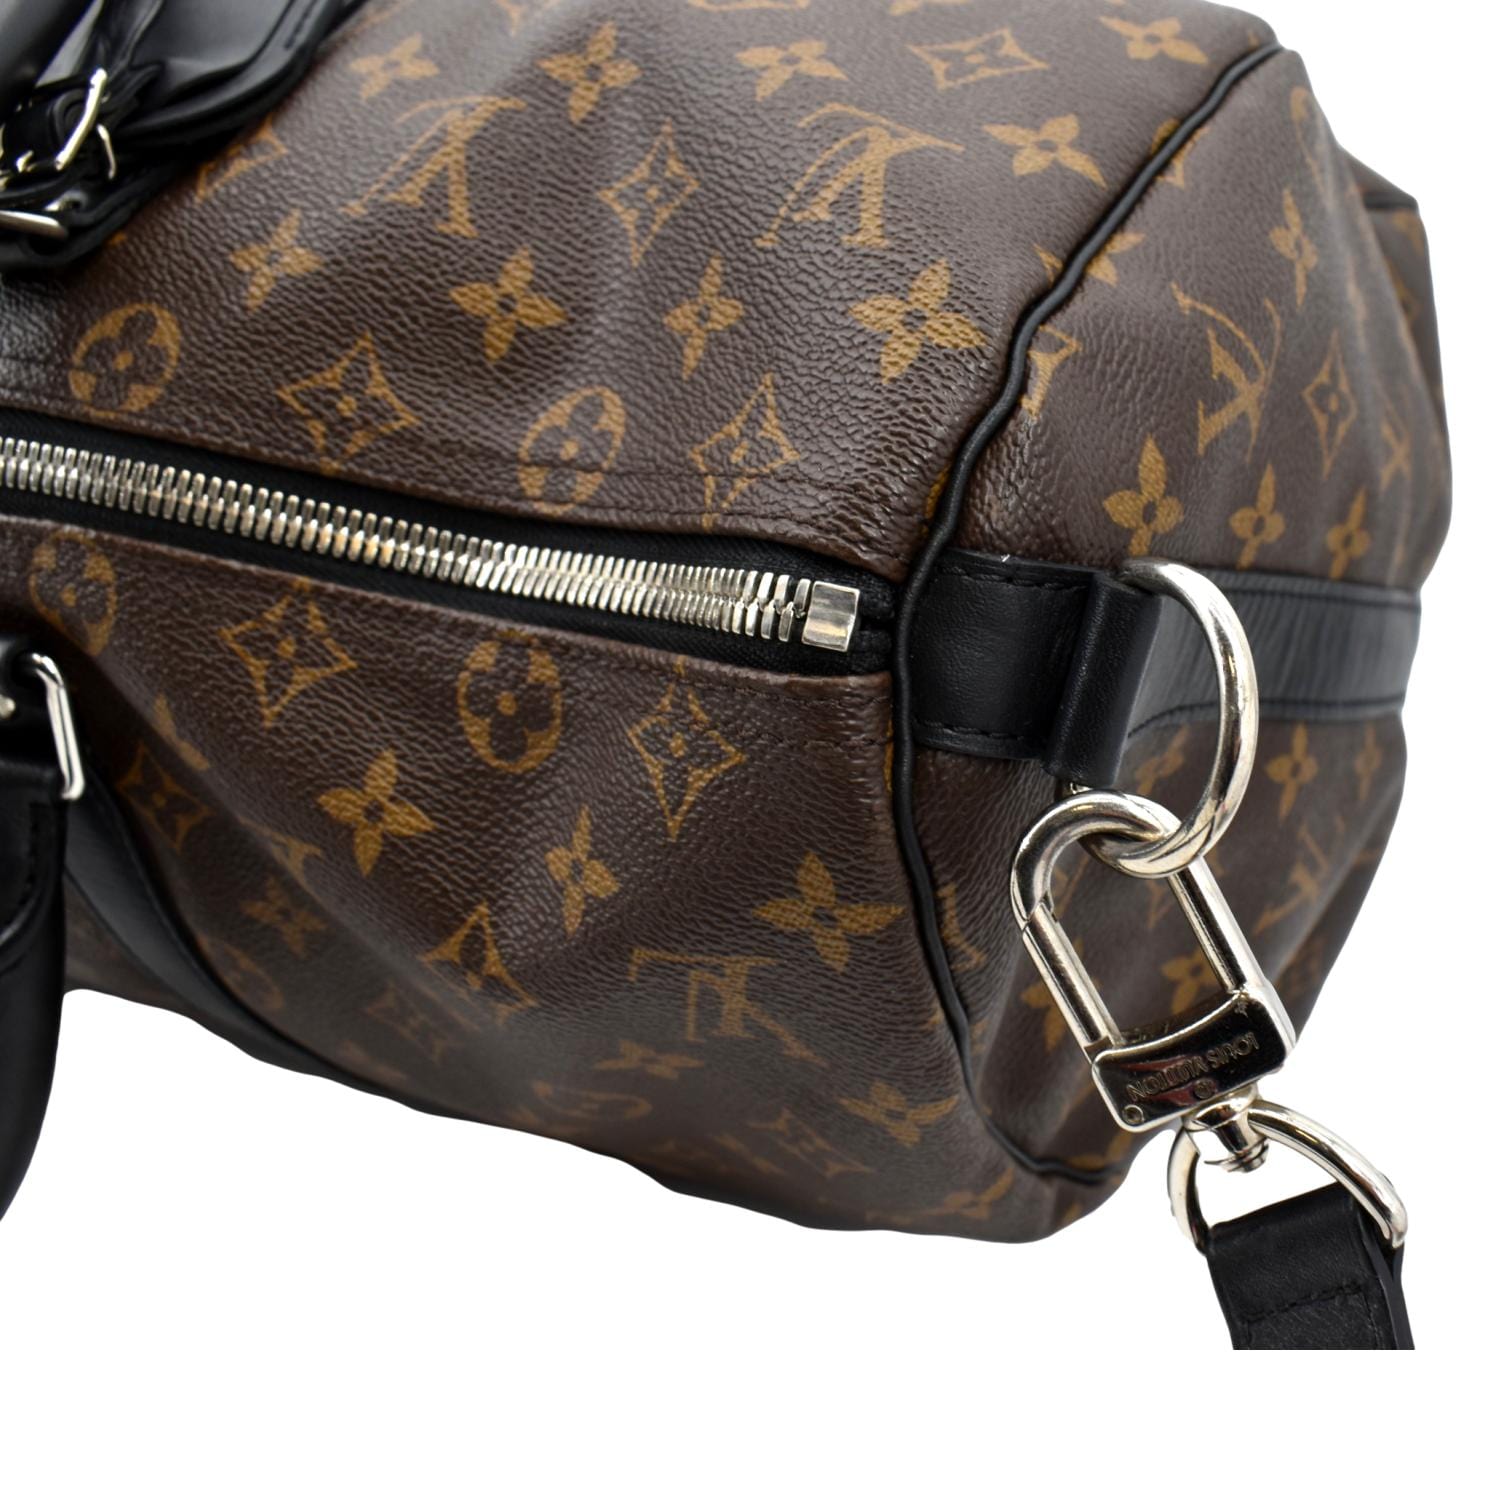 Buy Louis Vuitton Monogram Macassar Keepall 45 Bandouliere Duffle Bag